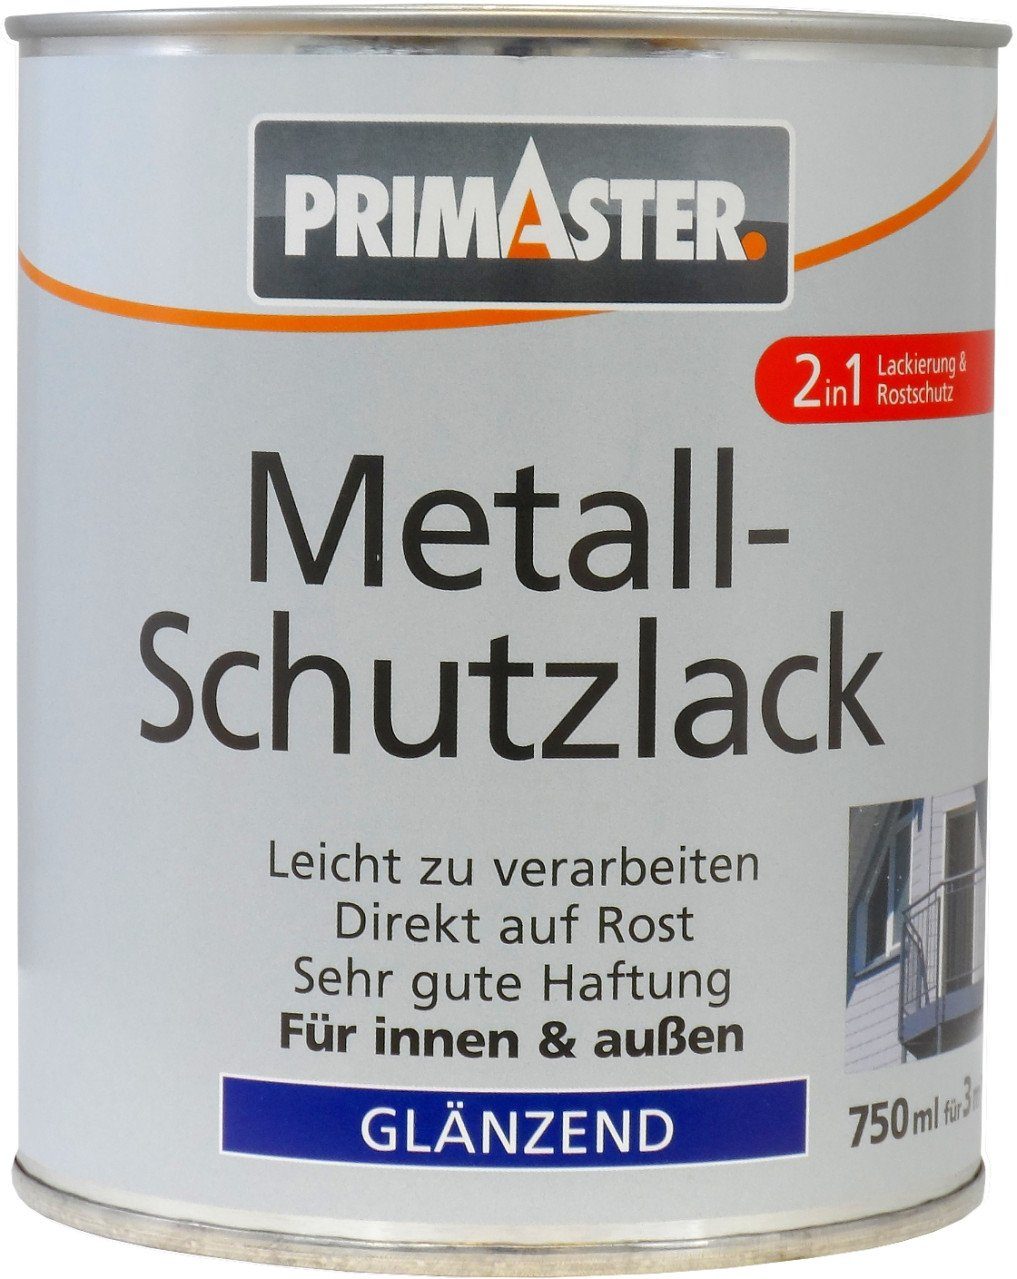 5010 ml Primaster 750 RAL Metallschutzlack Primaster Metall-Schutzlack